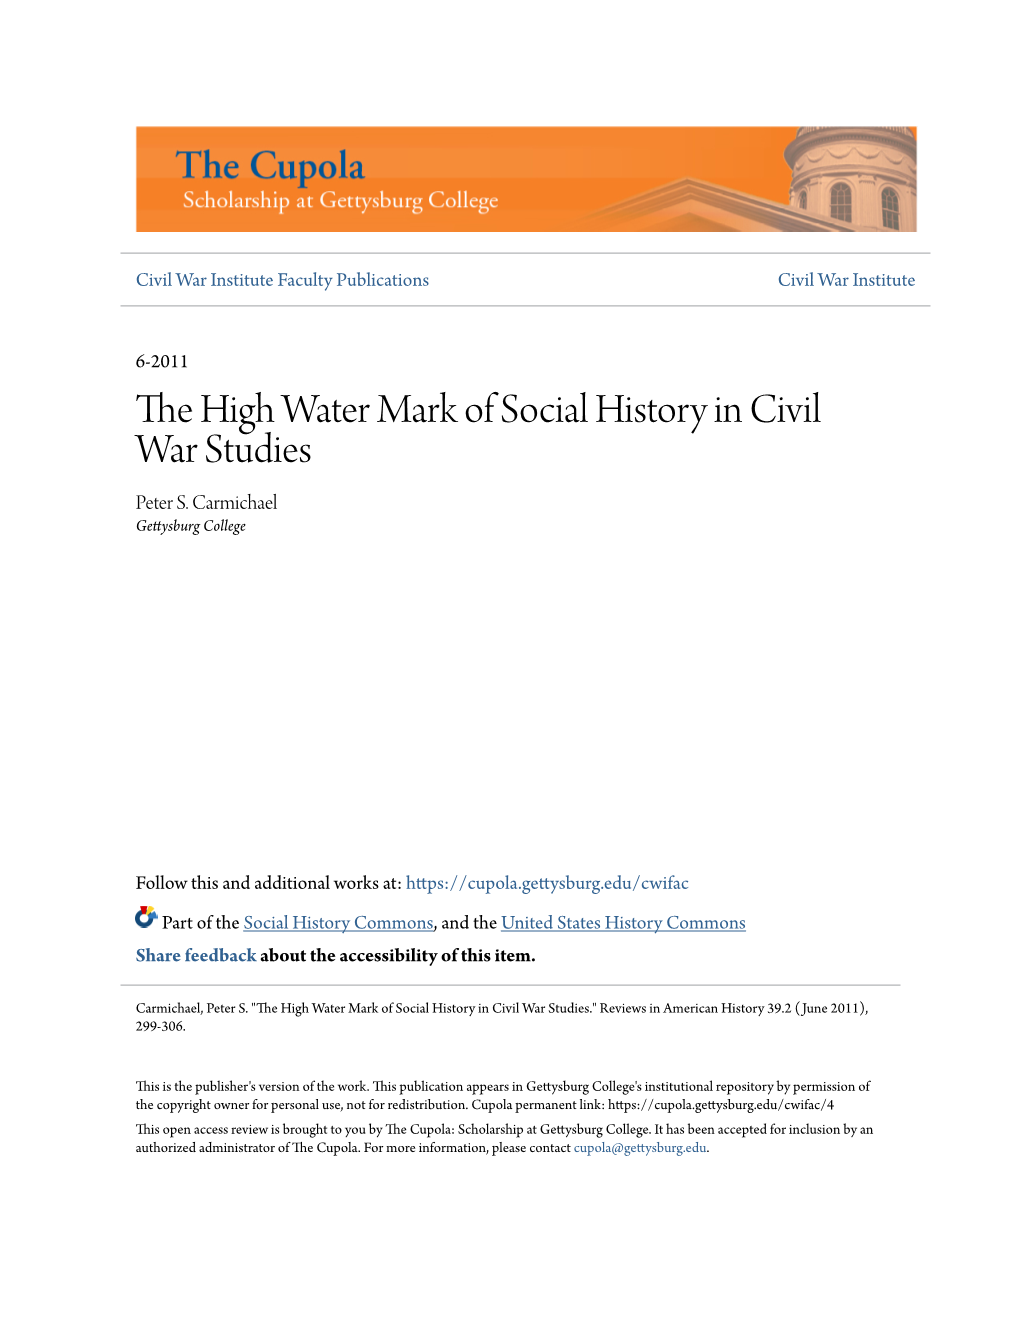 The High Water Mark of Social History in Civil War Studies